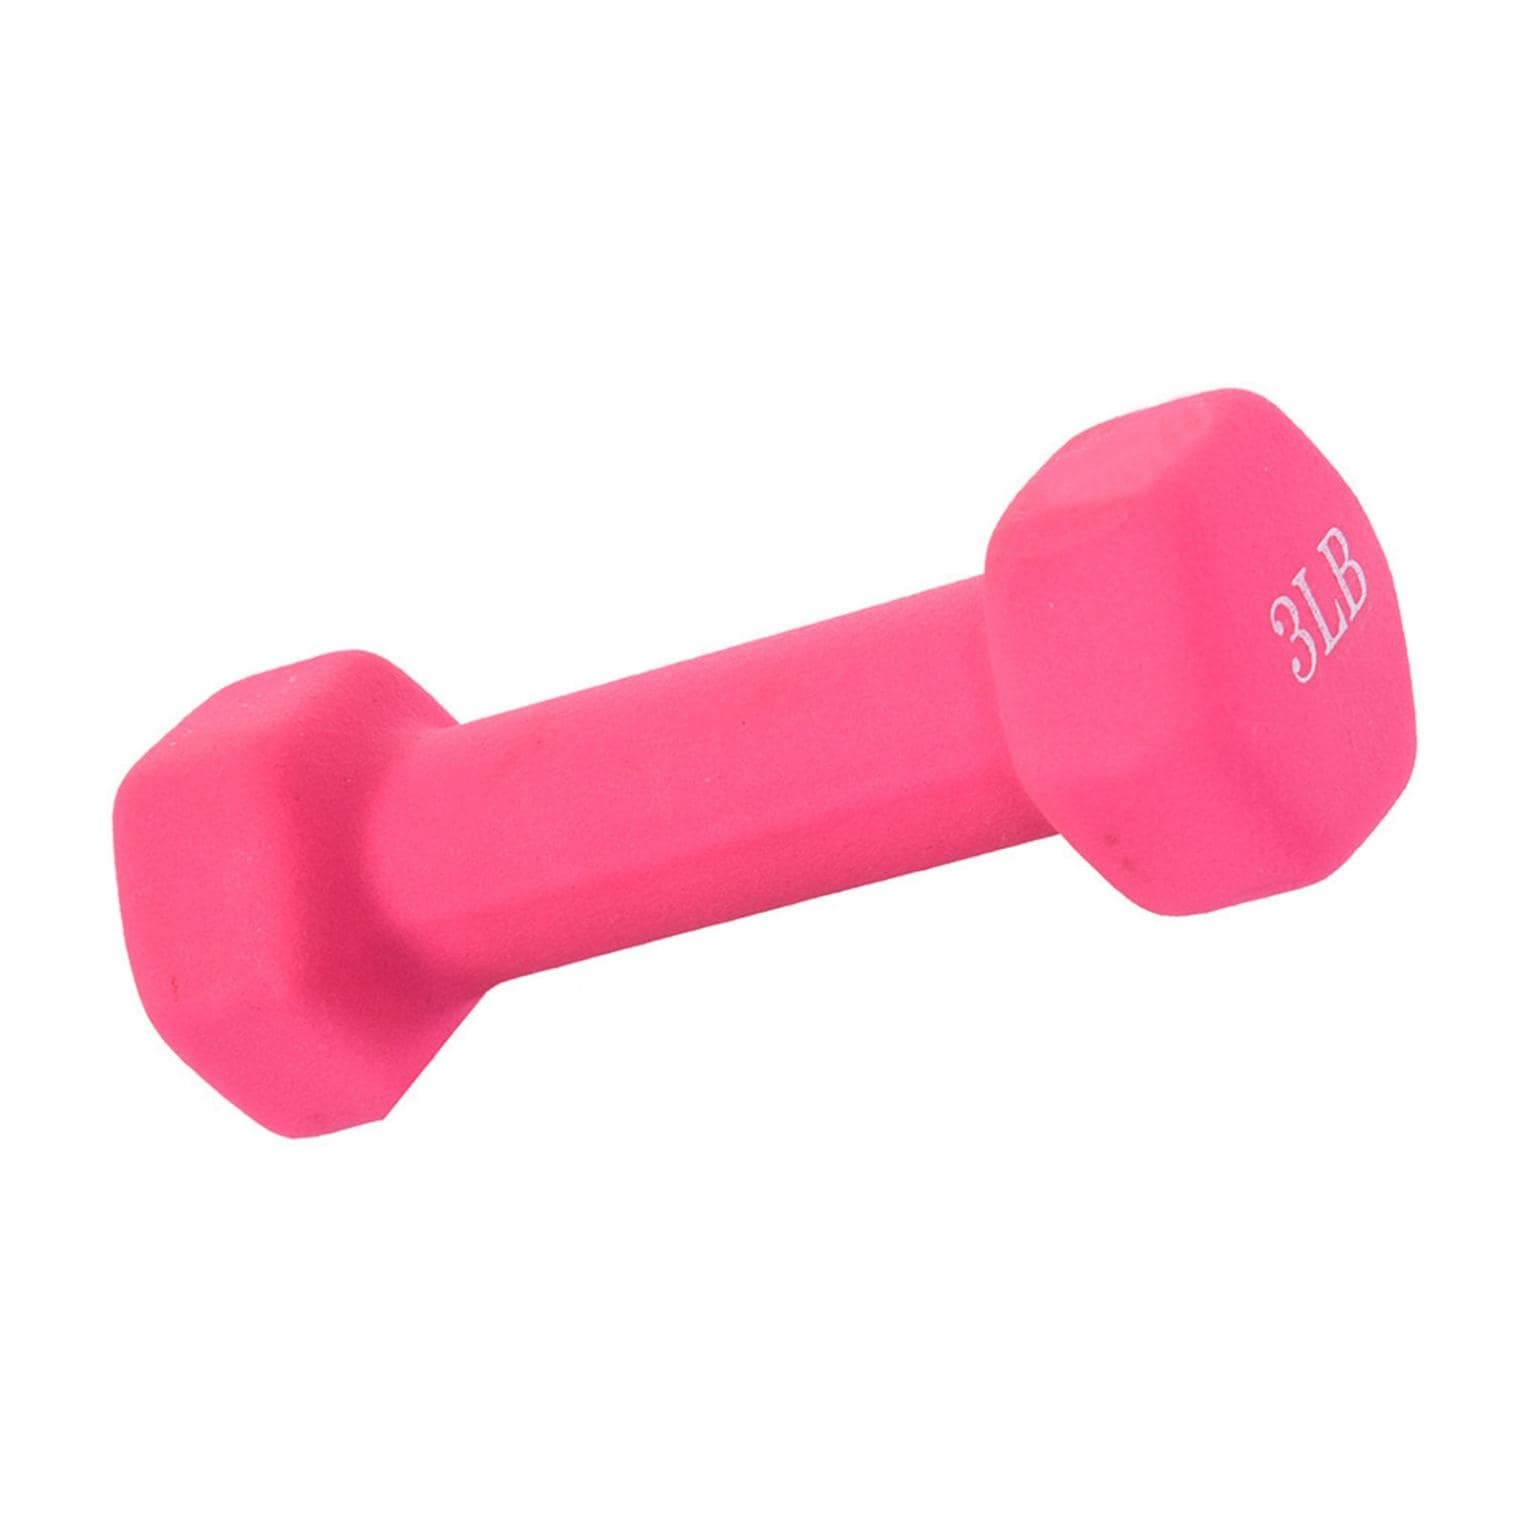 CAP Barbell Neoprene Coated Dumbbell Set Hot Pink 3lbs for sale online 